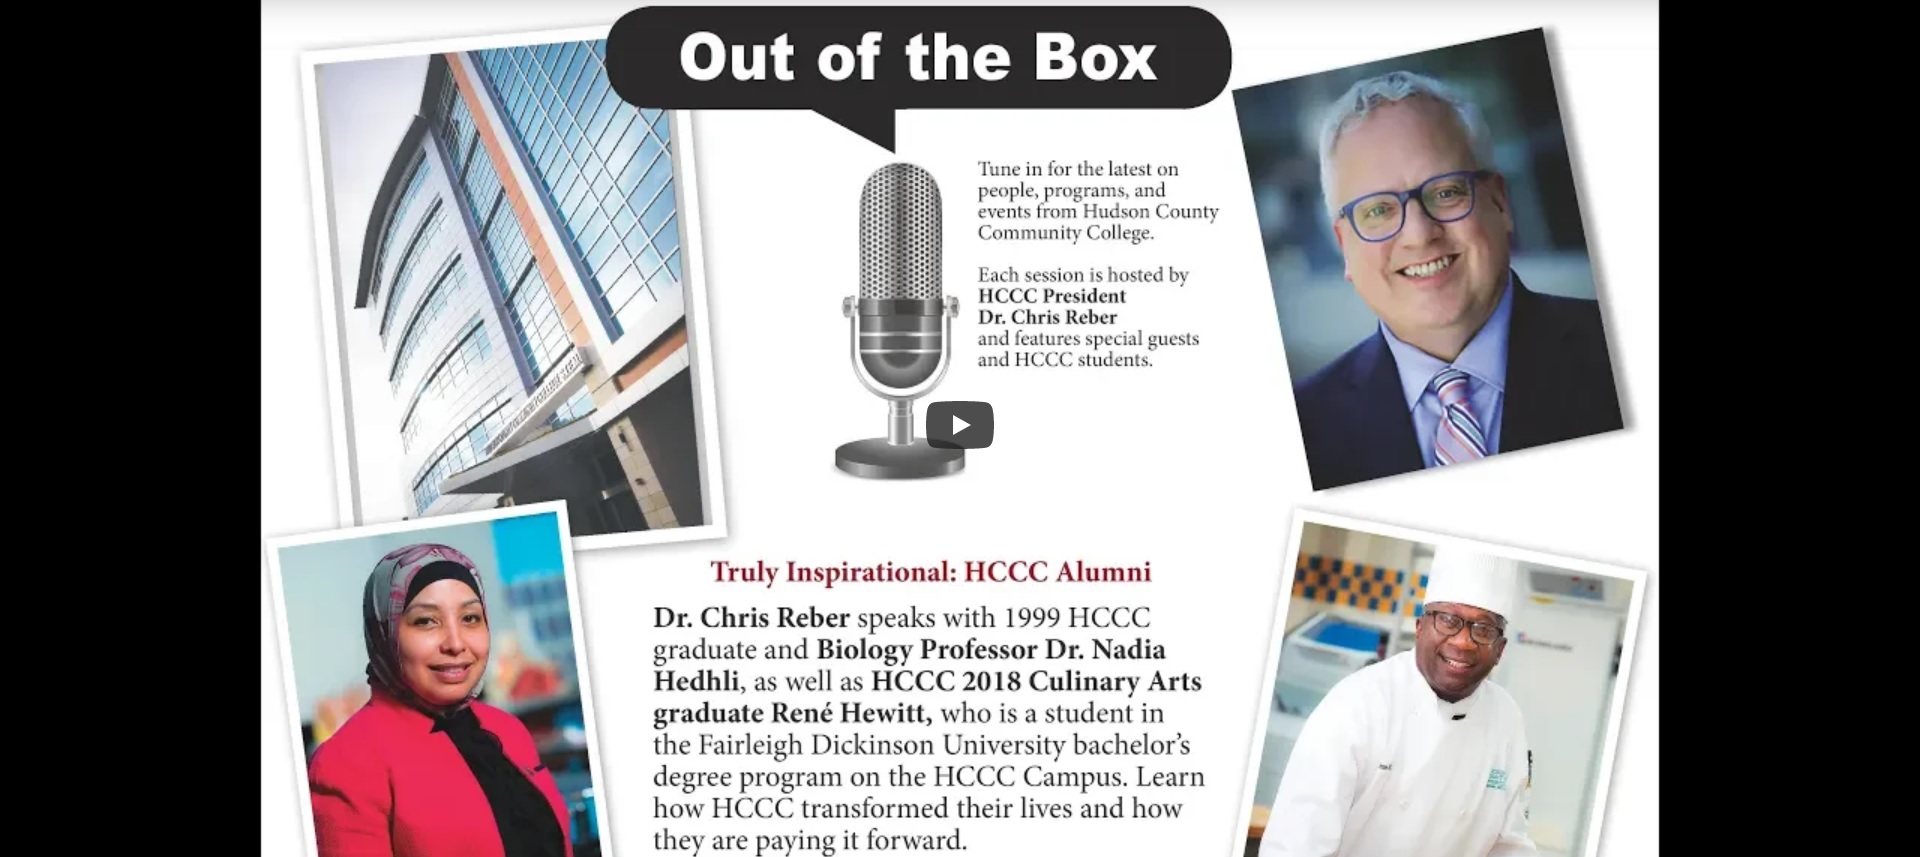 Truly Inspirational: HCCC Alumni